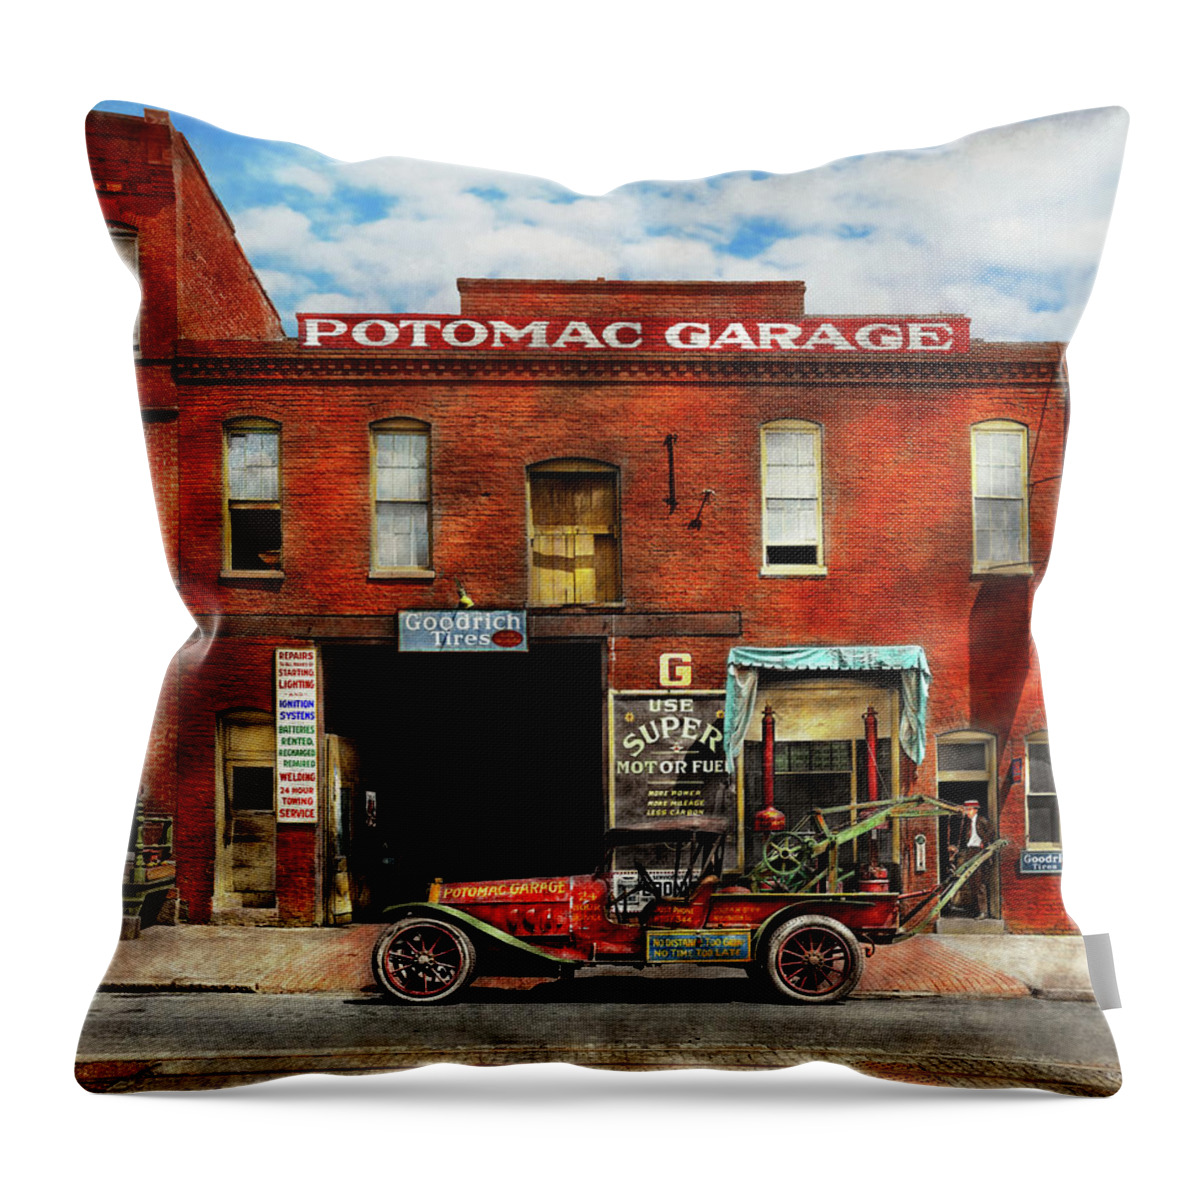 Potomac Garage Throw Pillow featuring the photograph Car - Garage - Misfit Garage 1922 by Mike Savad